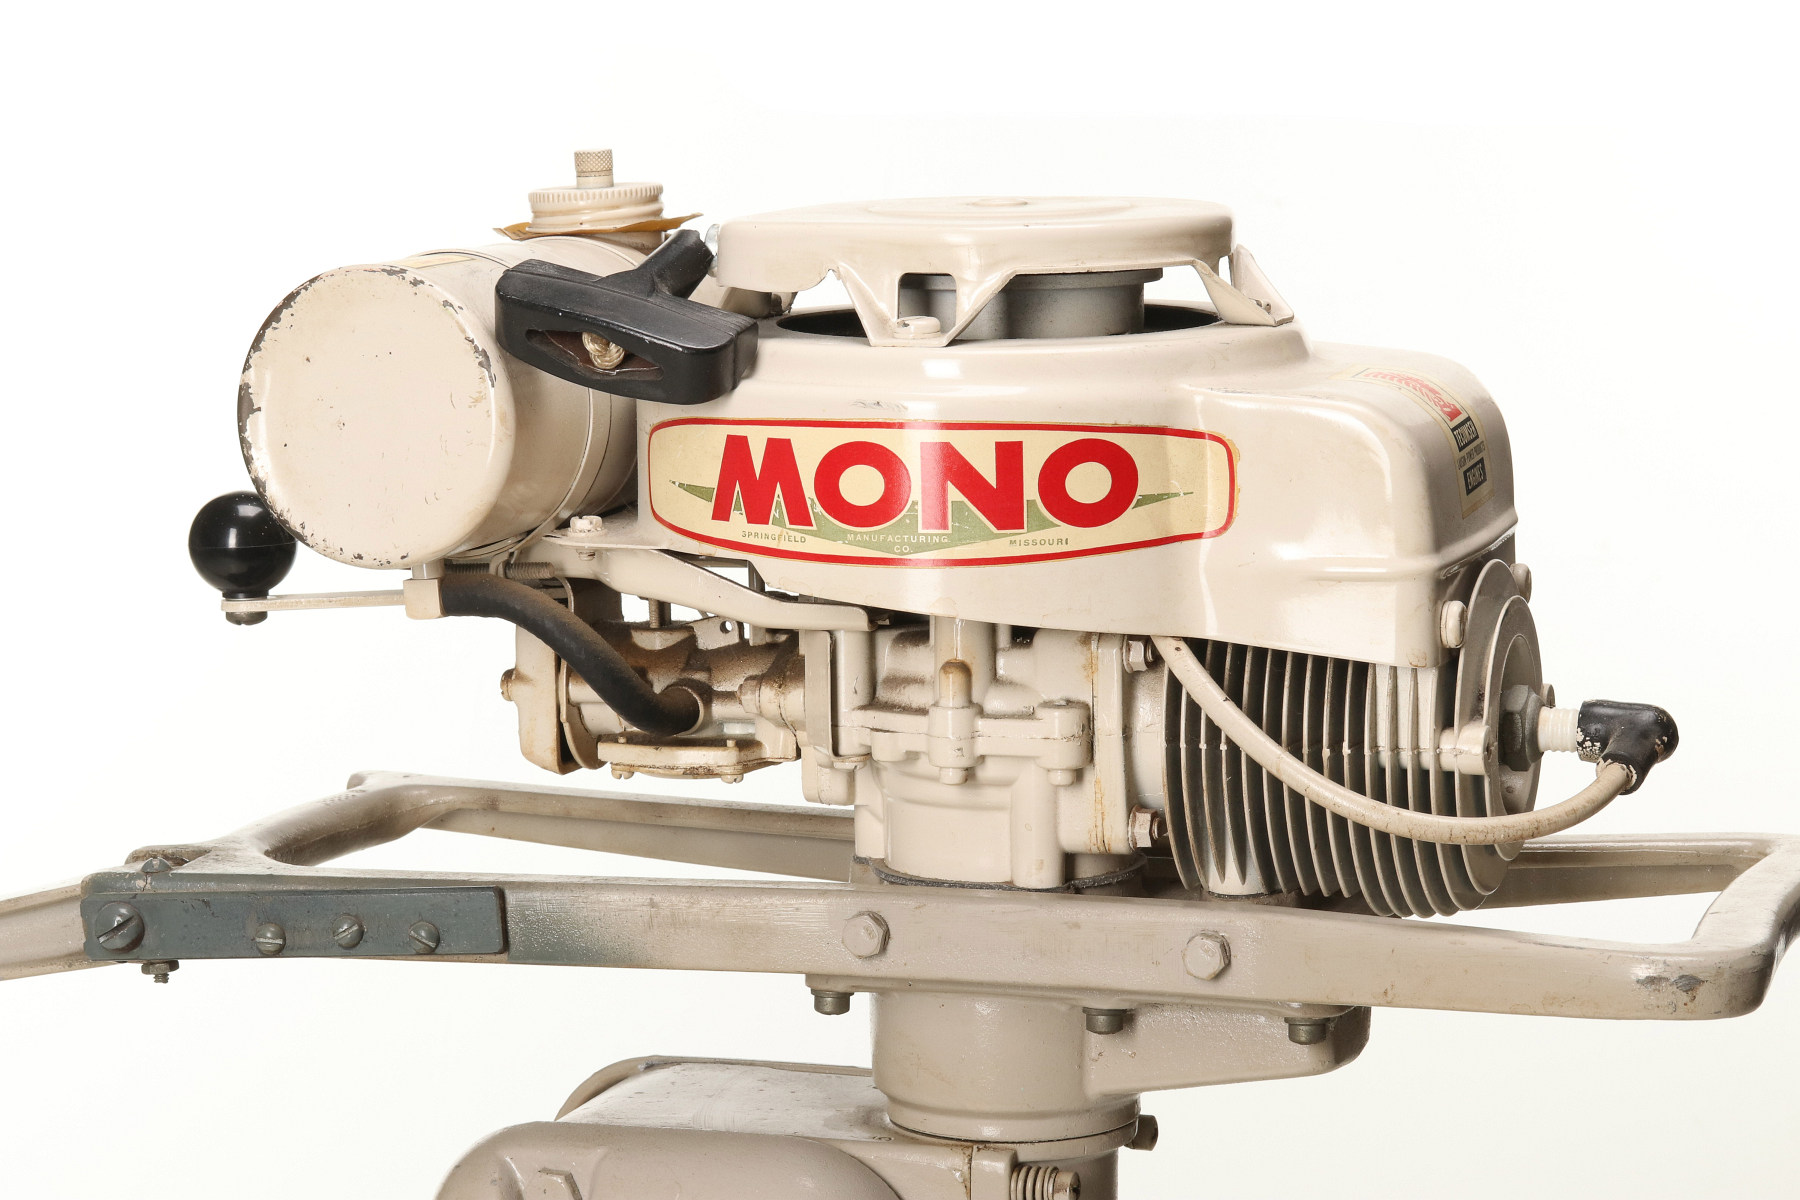 A MONO M5A OUTBOARD MOTOR, EXCELLENT ORIGINAL CONDITION